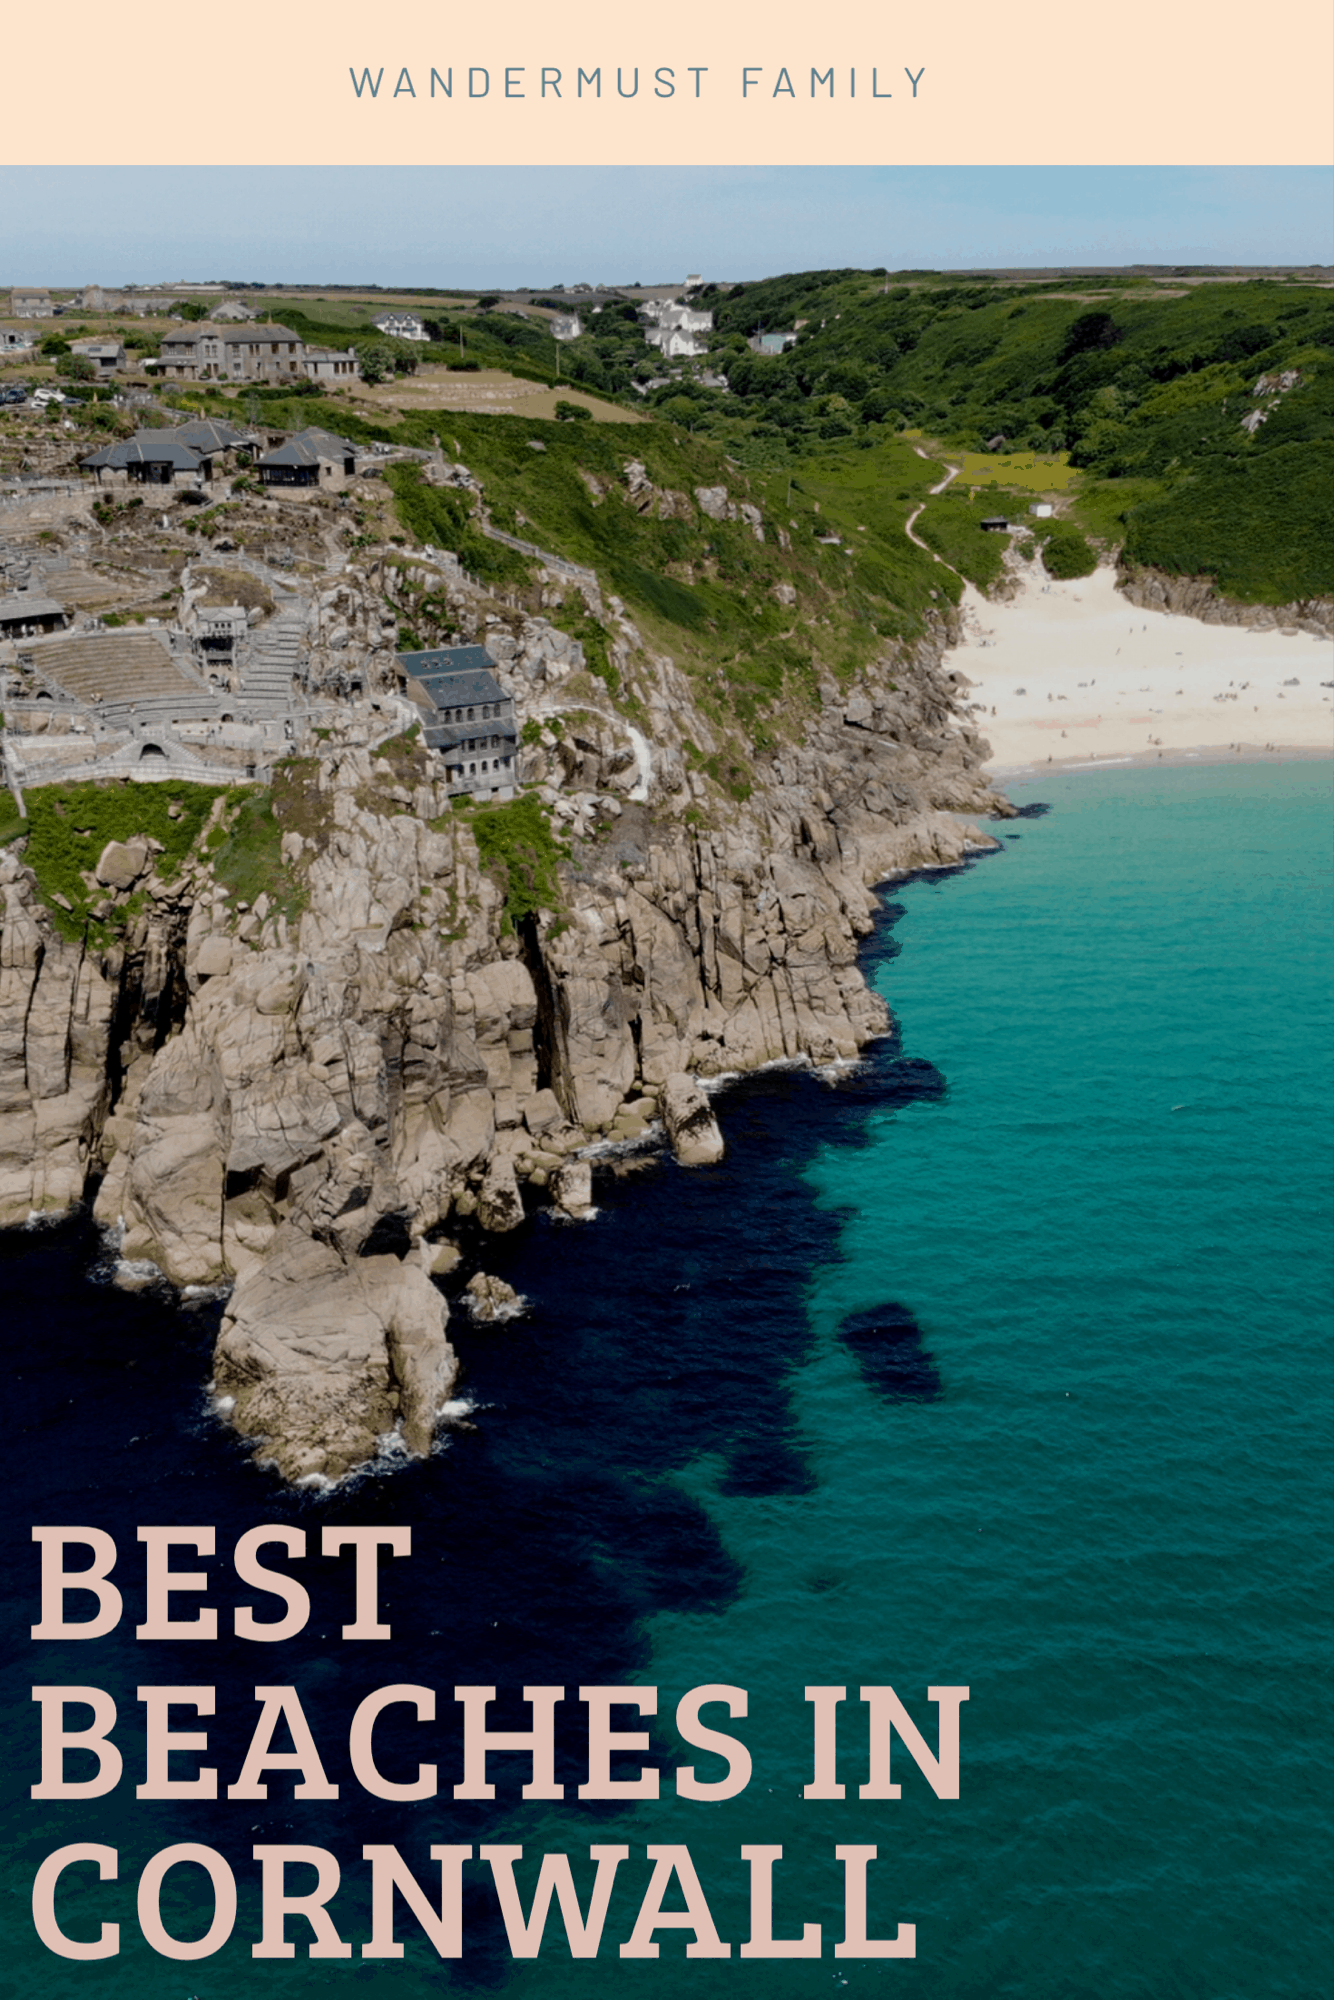 Best Beaches in Cornwall. Most Beautiful Beaches in Cornwall - North Cornwall Beaches - South Cornwall Beaches - Cornwall Hidden Gem Beach - #cornwall #cornwalltravel #cornwallbeach #cornwallbestbeaches #beach #beautifulbeaches